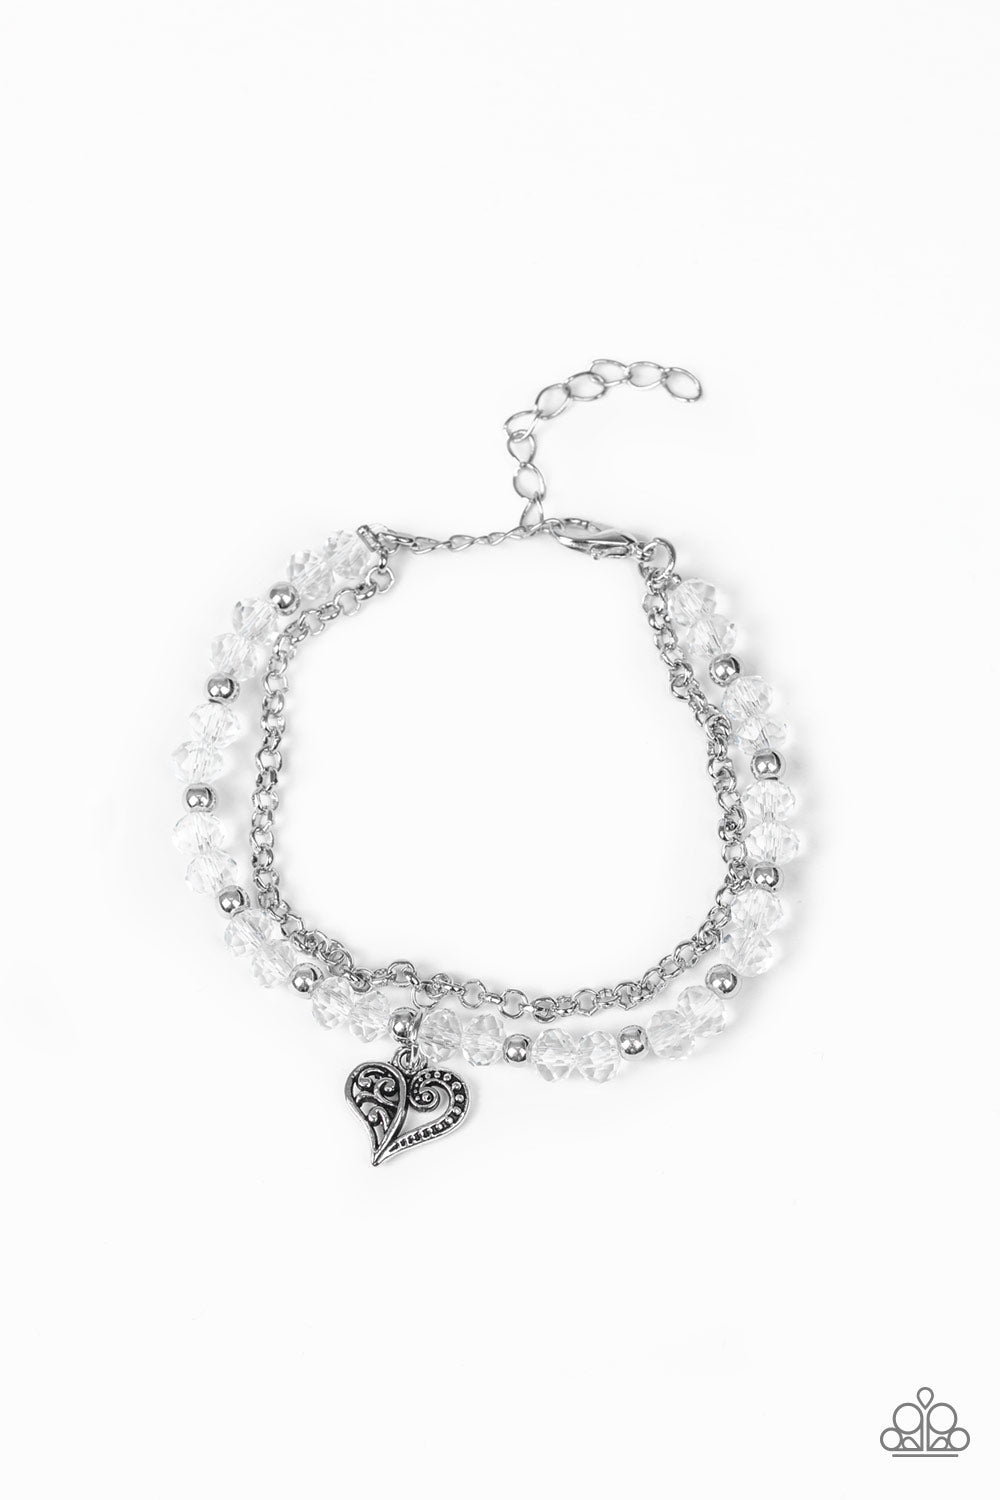 Rare Romance - White Bracelet - Princess Glam Shop